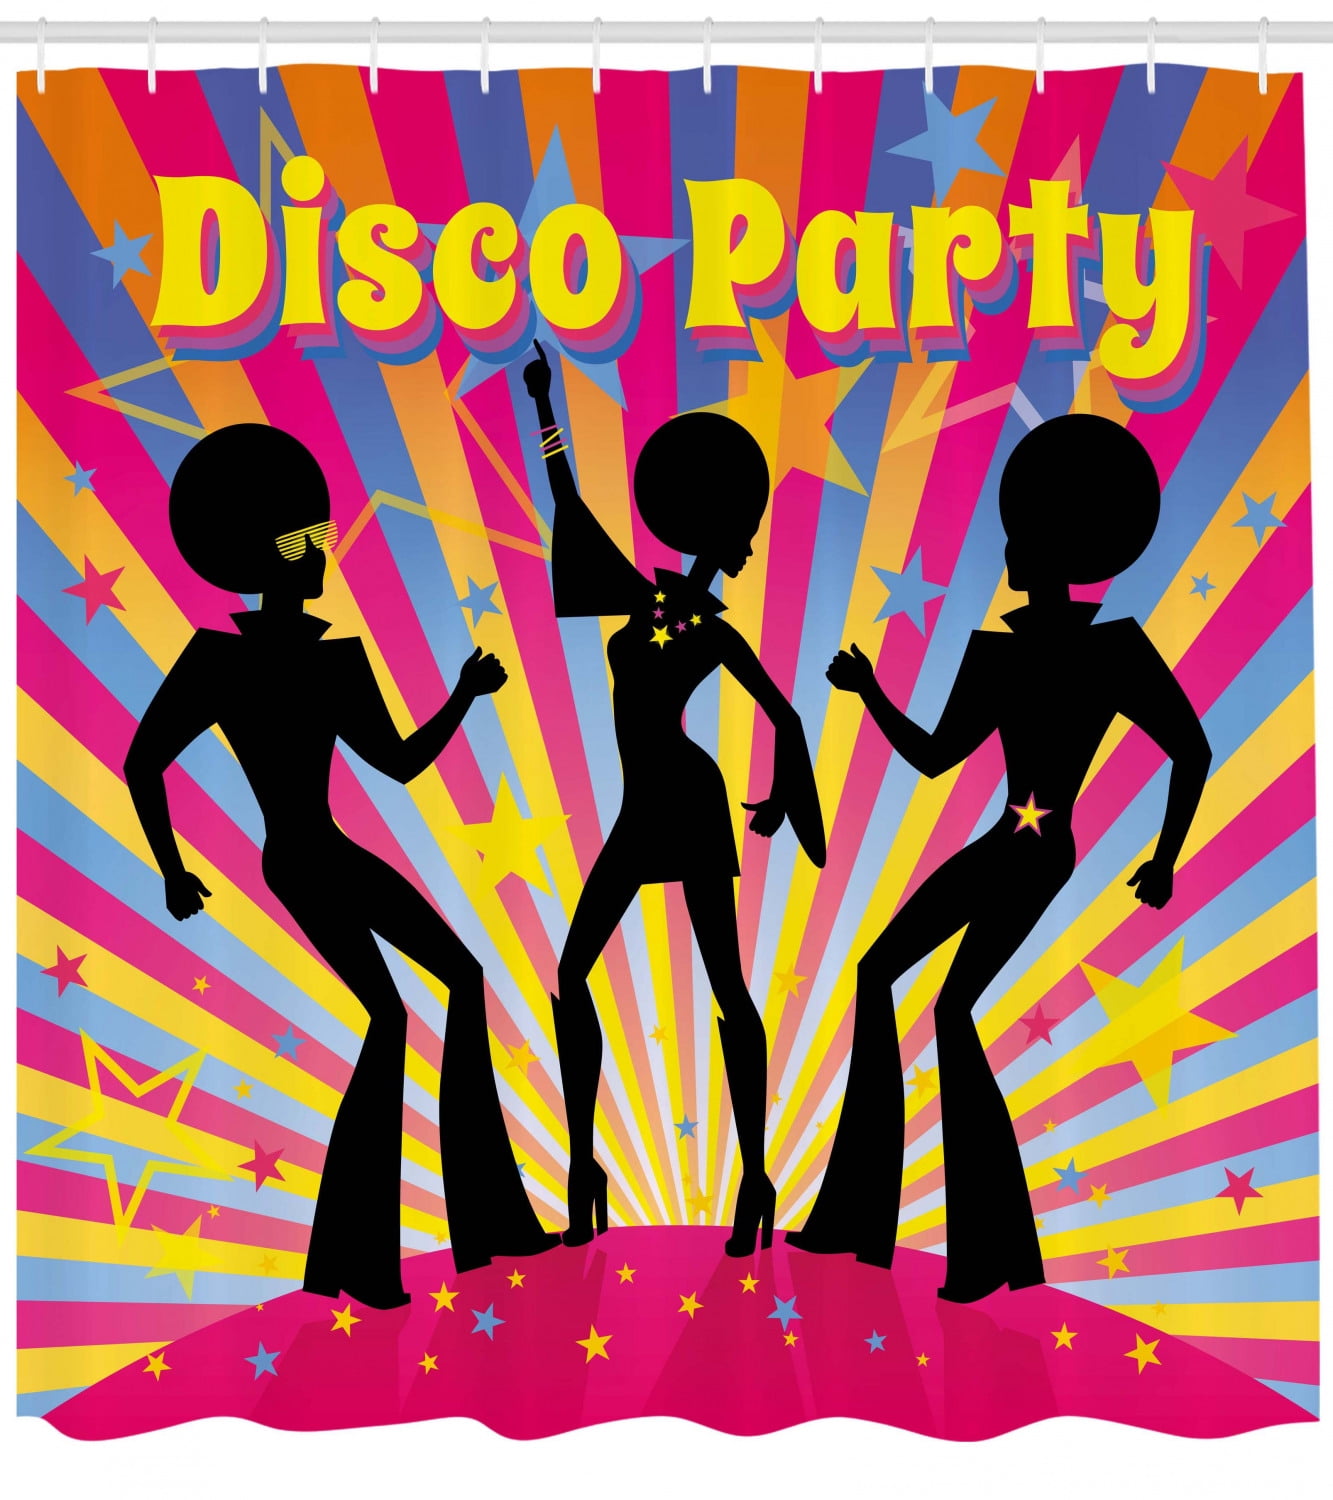 Disco disco party party remix. Пригласительные в стиле диско. Постеры в стиле диско. Приглашение в стиле диско. Детская вечеринка в стиле диско.